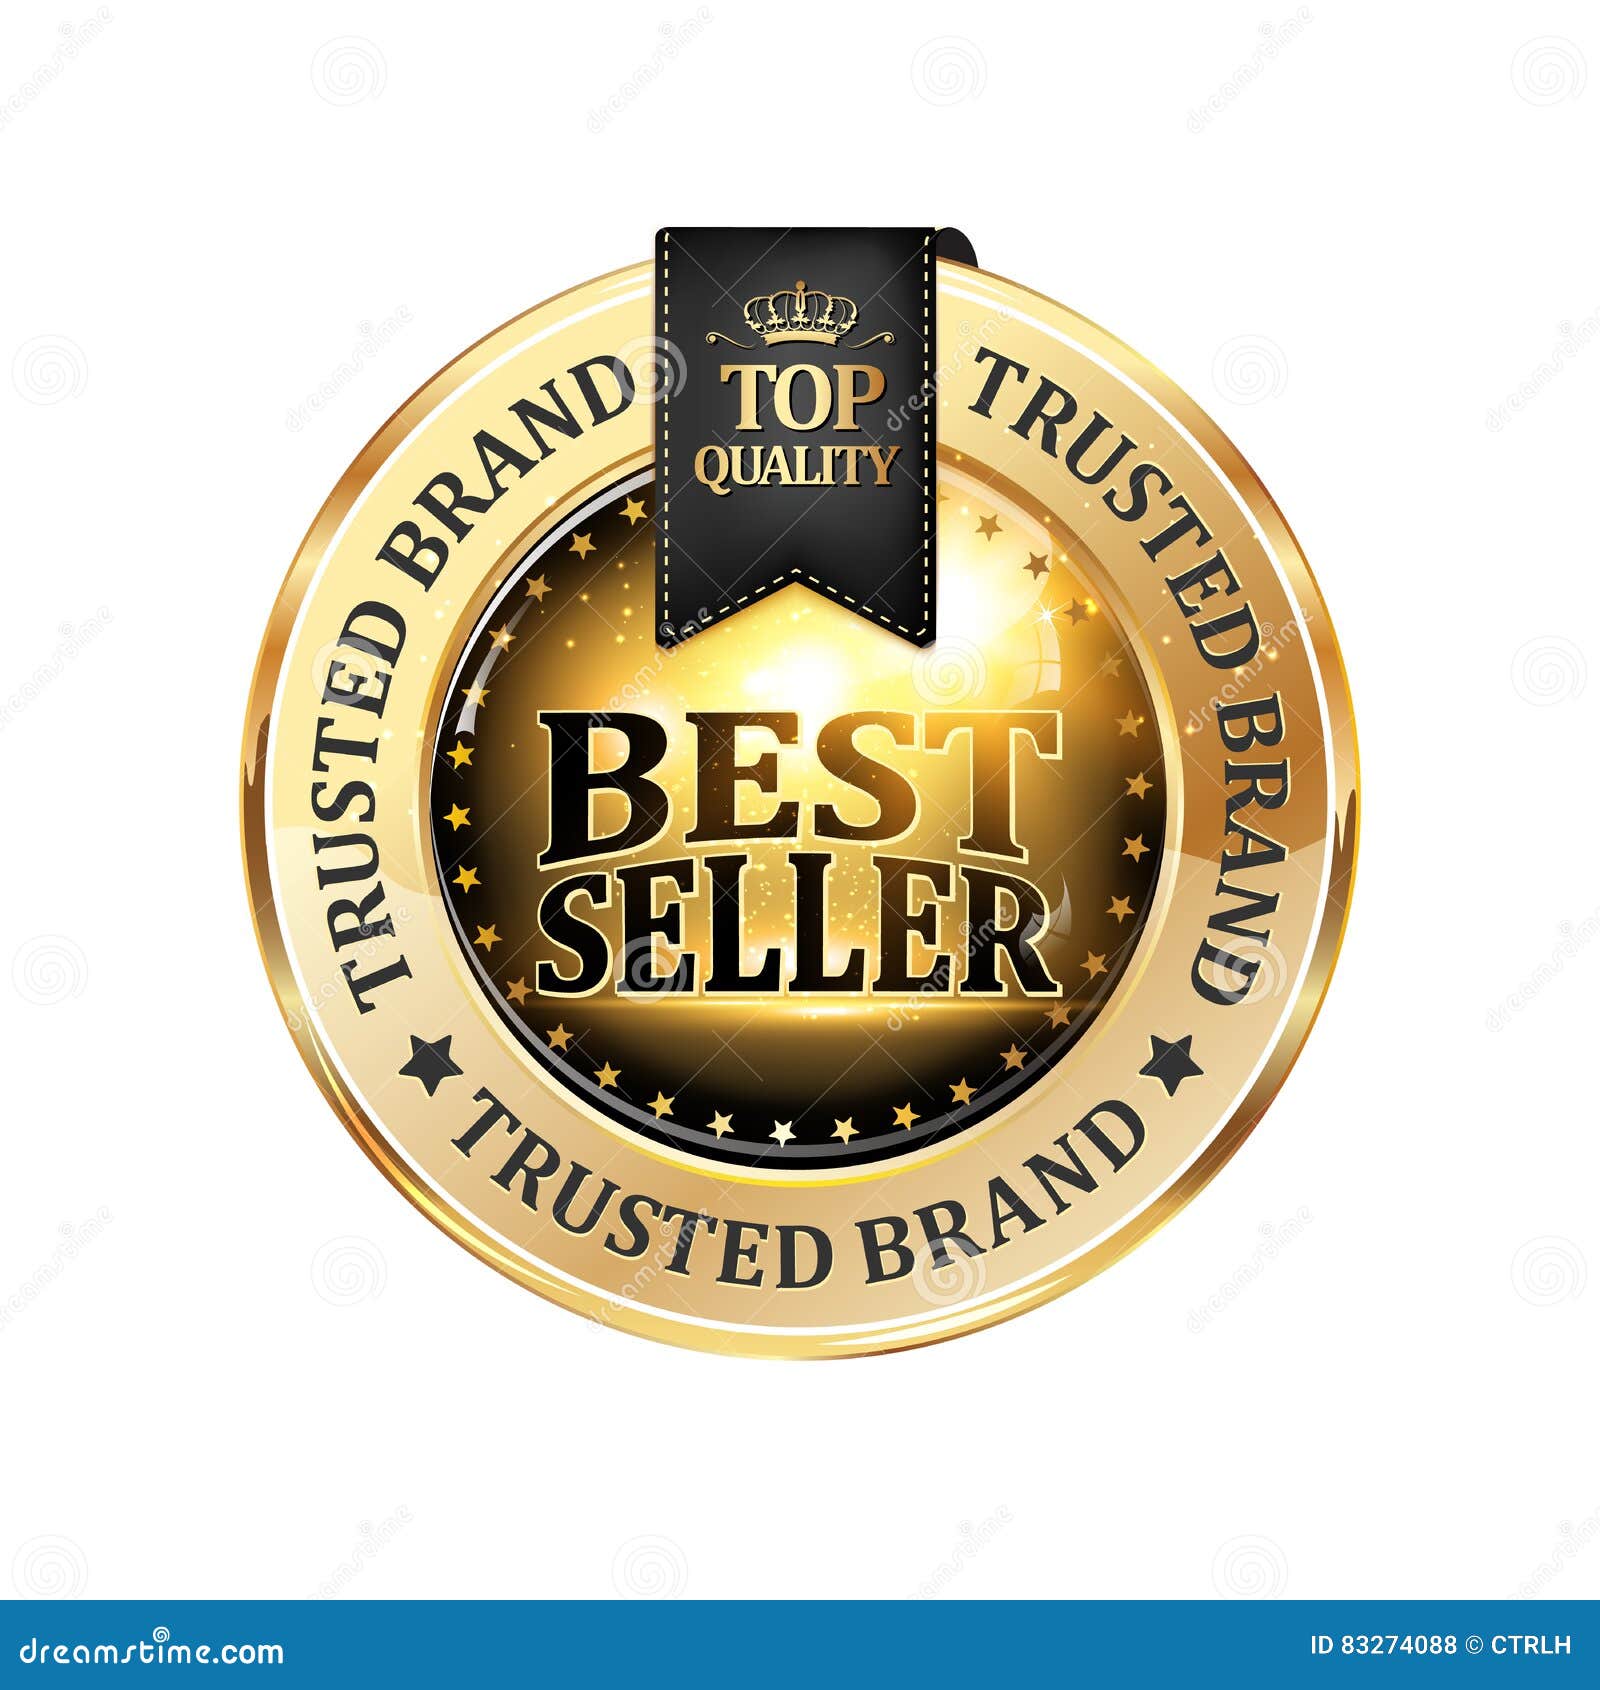 https://thumbs.dreamstime.com/z/trusted-brand-best-seller-premium-quality-83274088.jpg